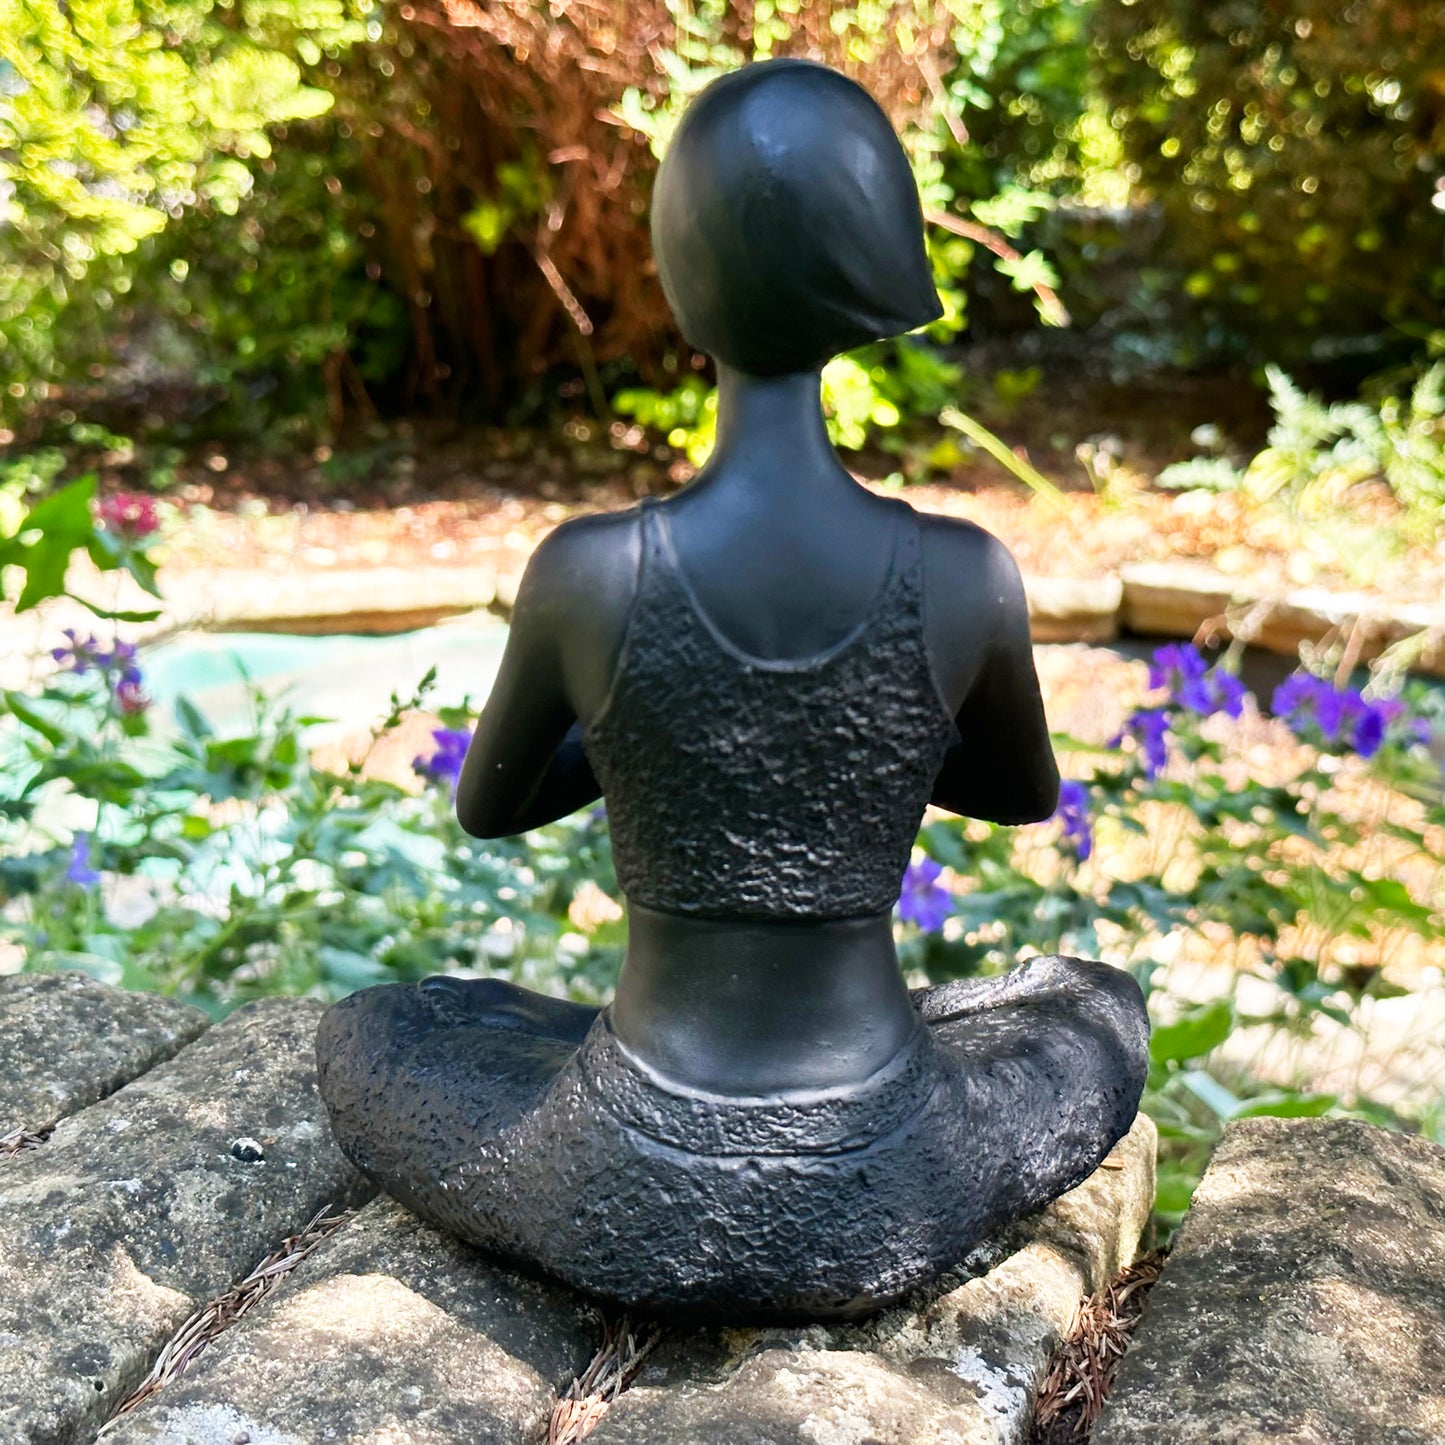 Black Yoga Woman Figurine